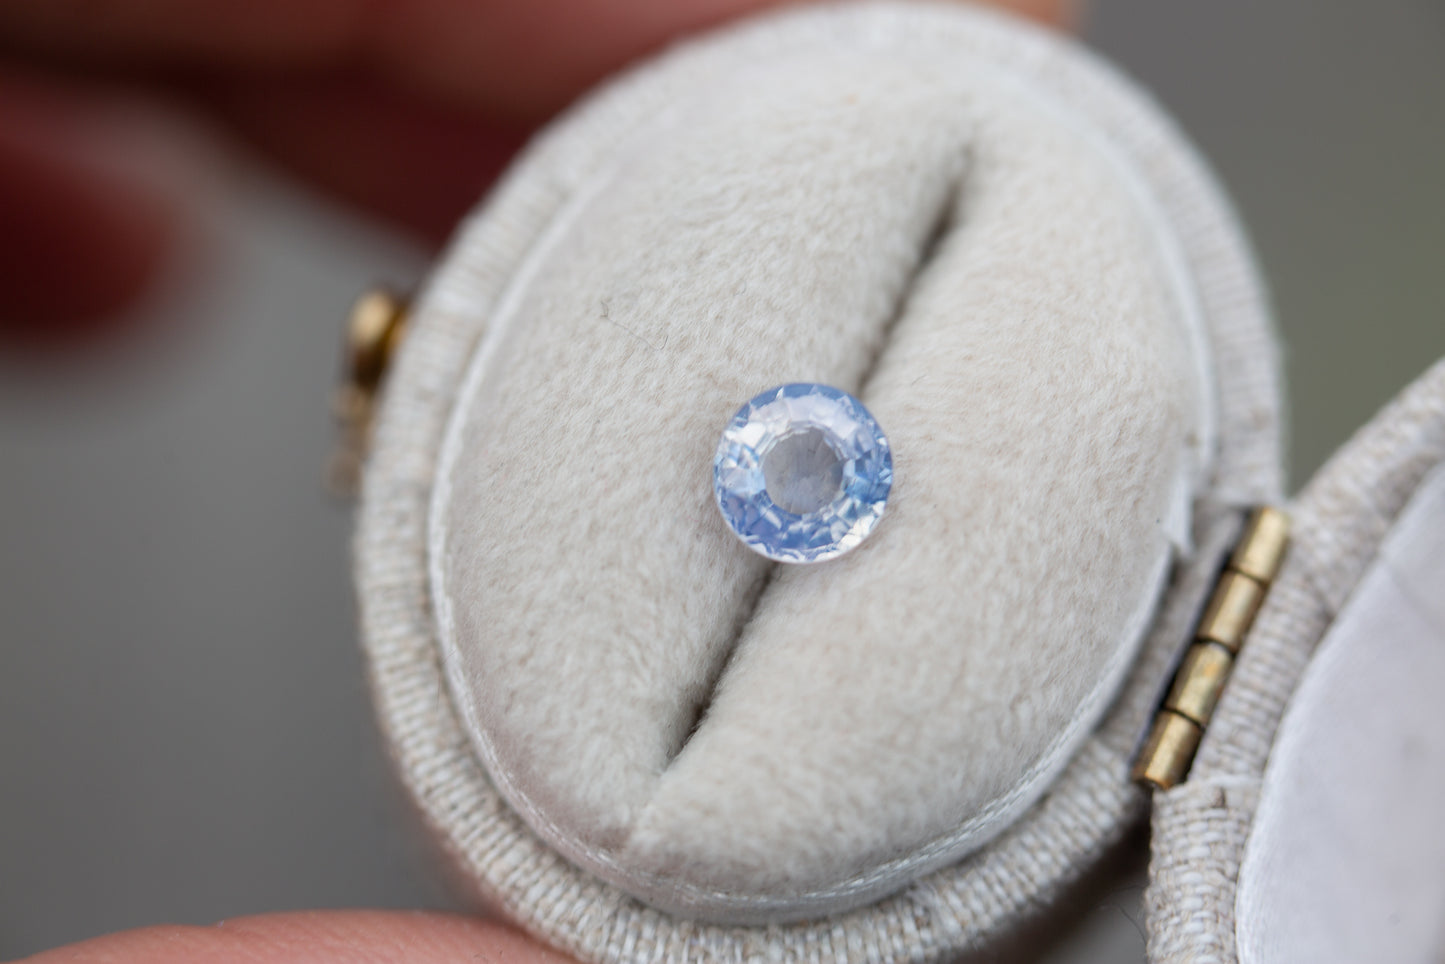 .72ct round opalescent blue white sapphire